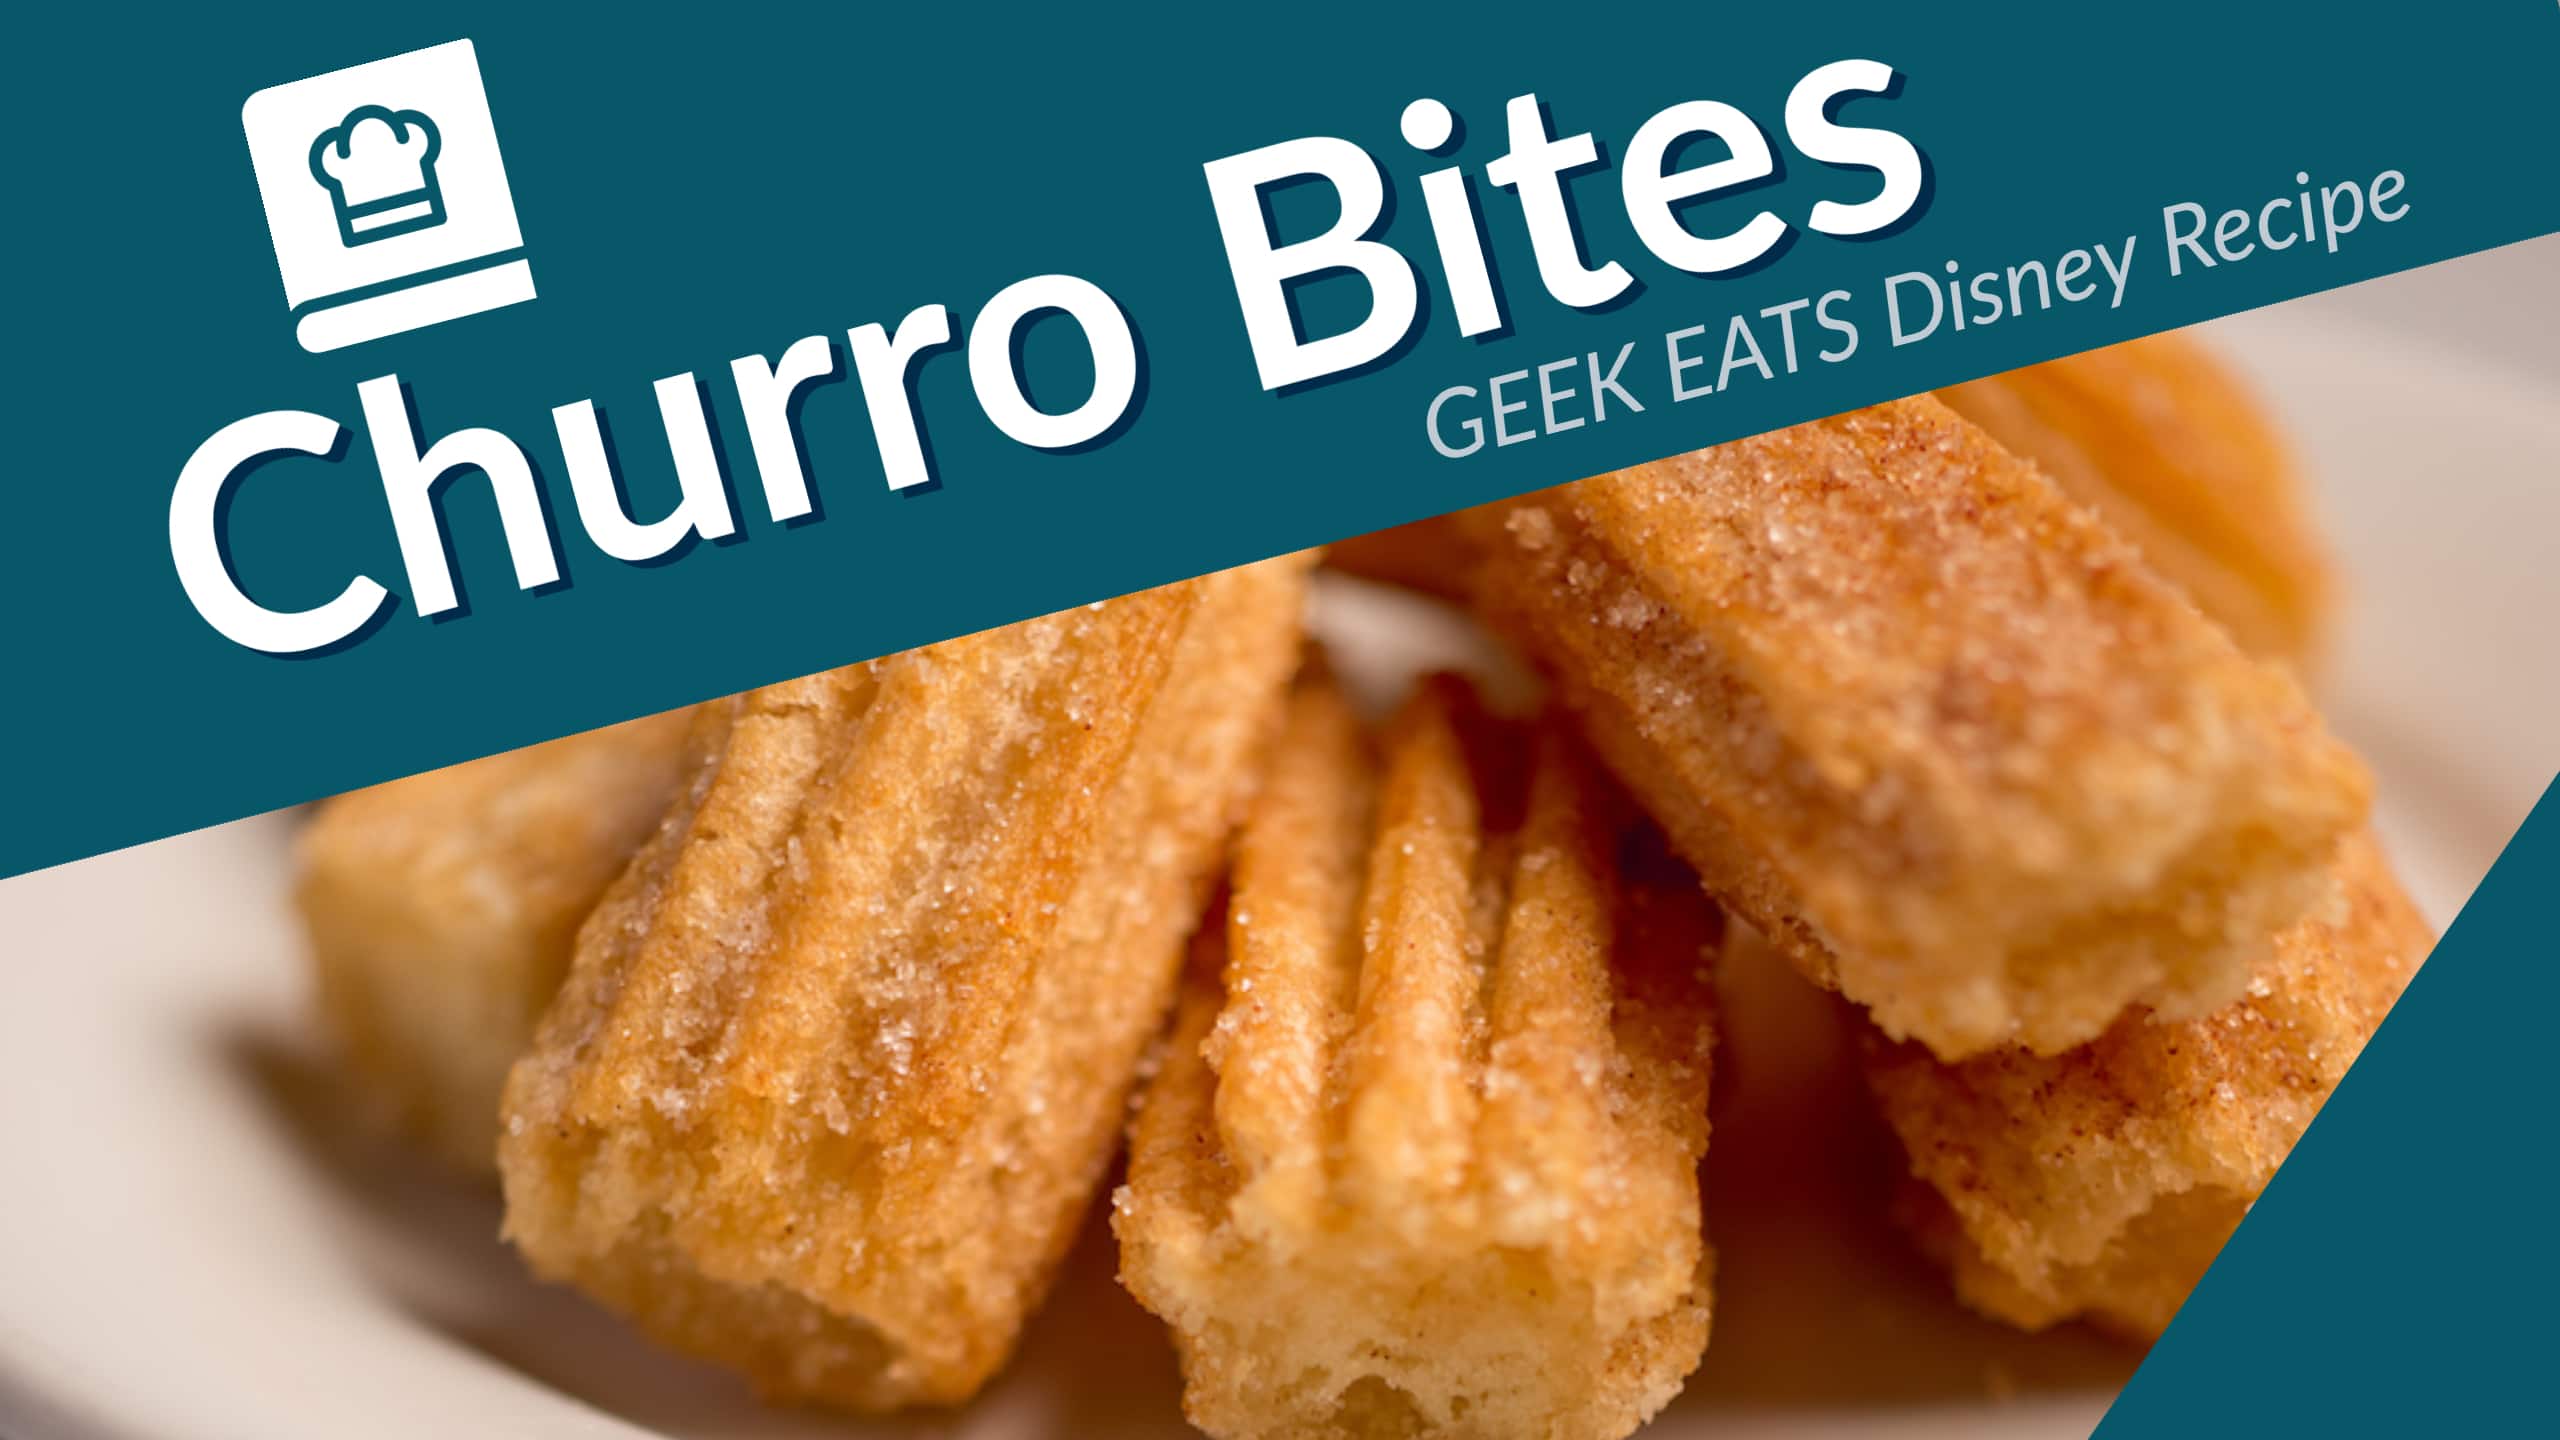 Disney Parks Churro Bites – GEEK EATS Disney Recipe